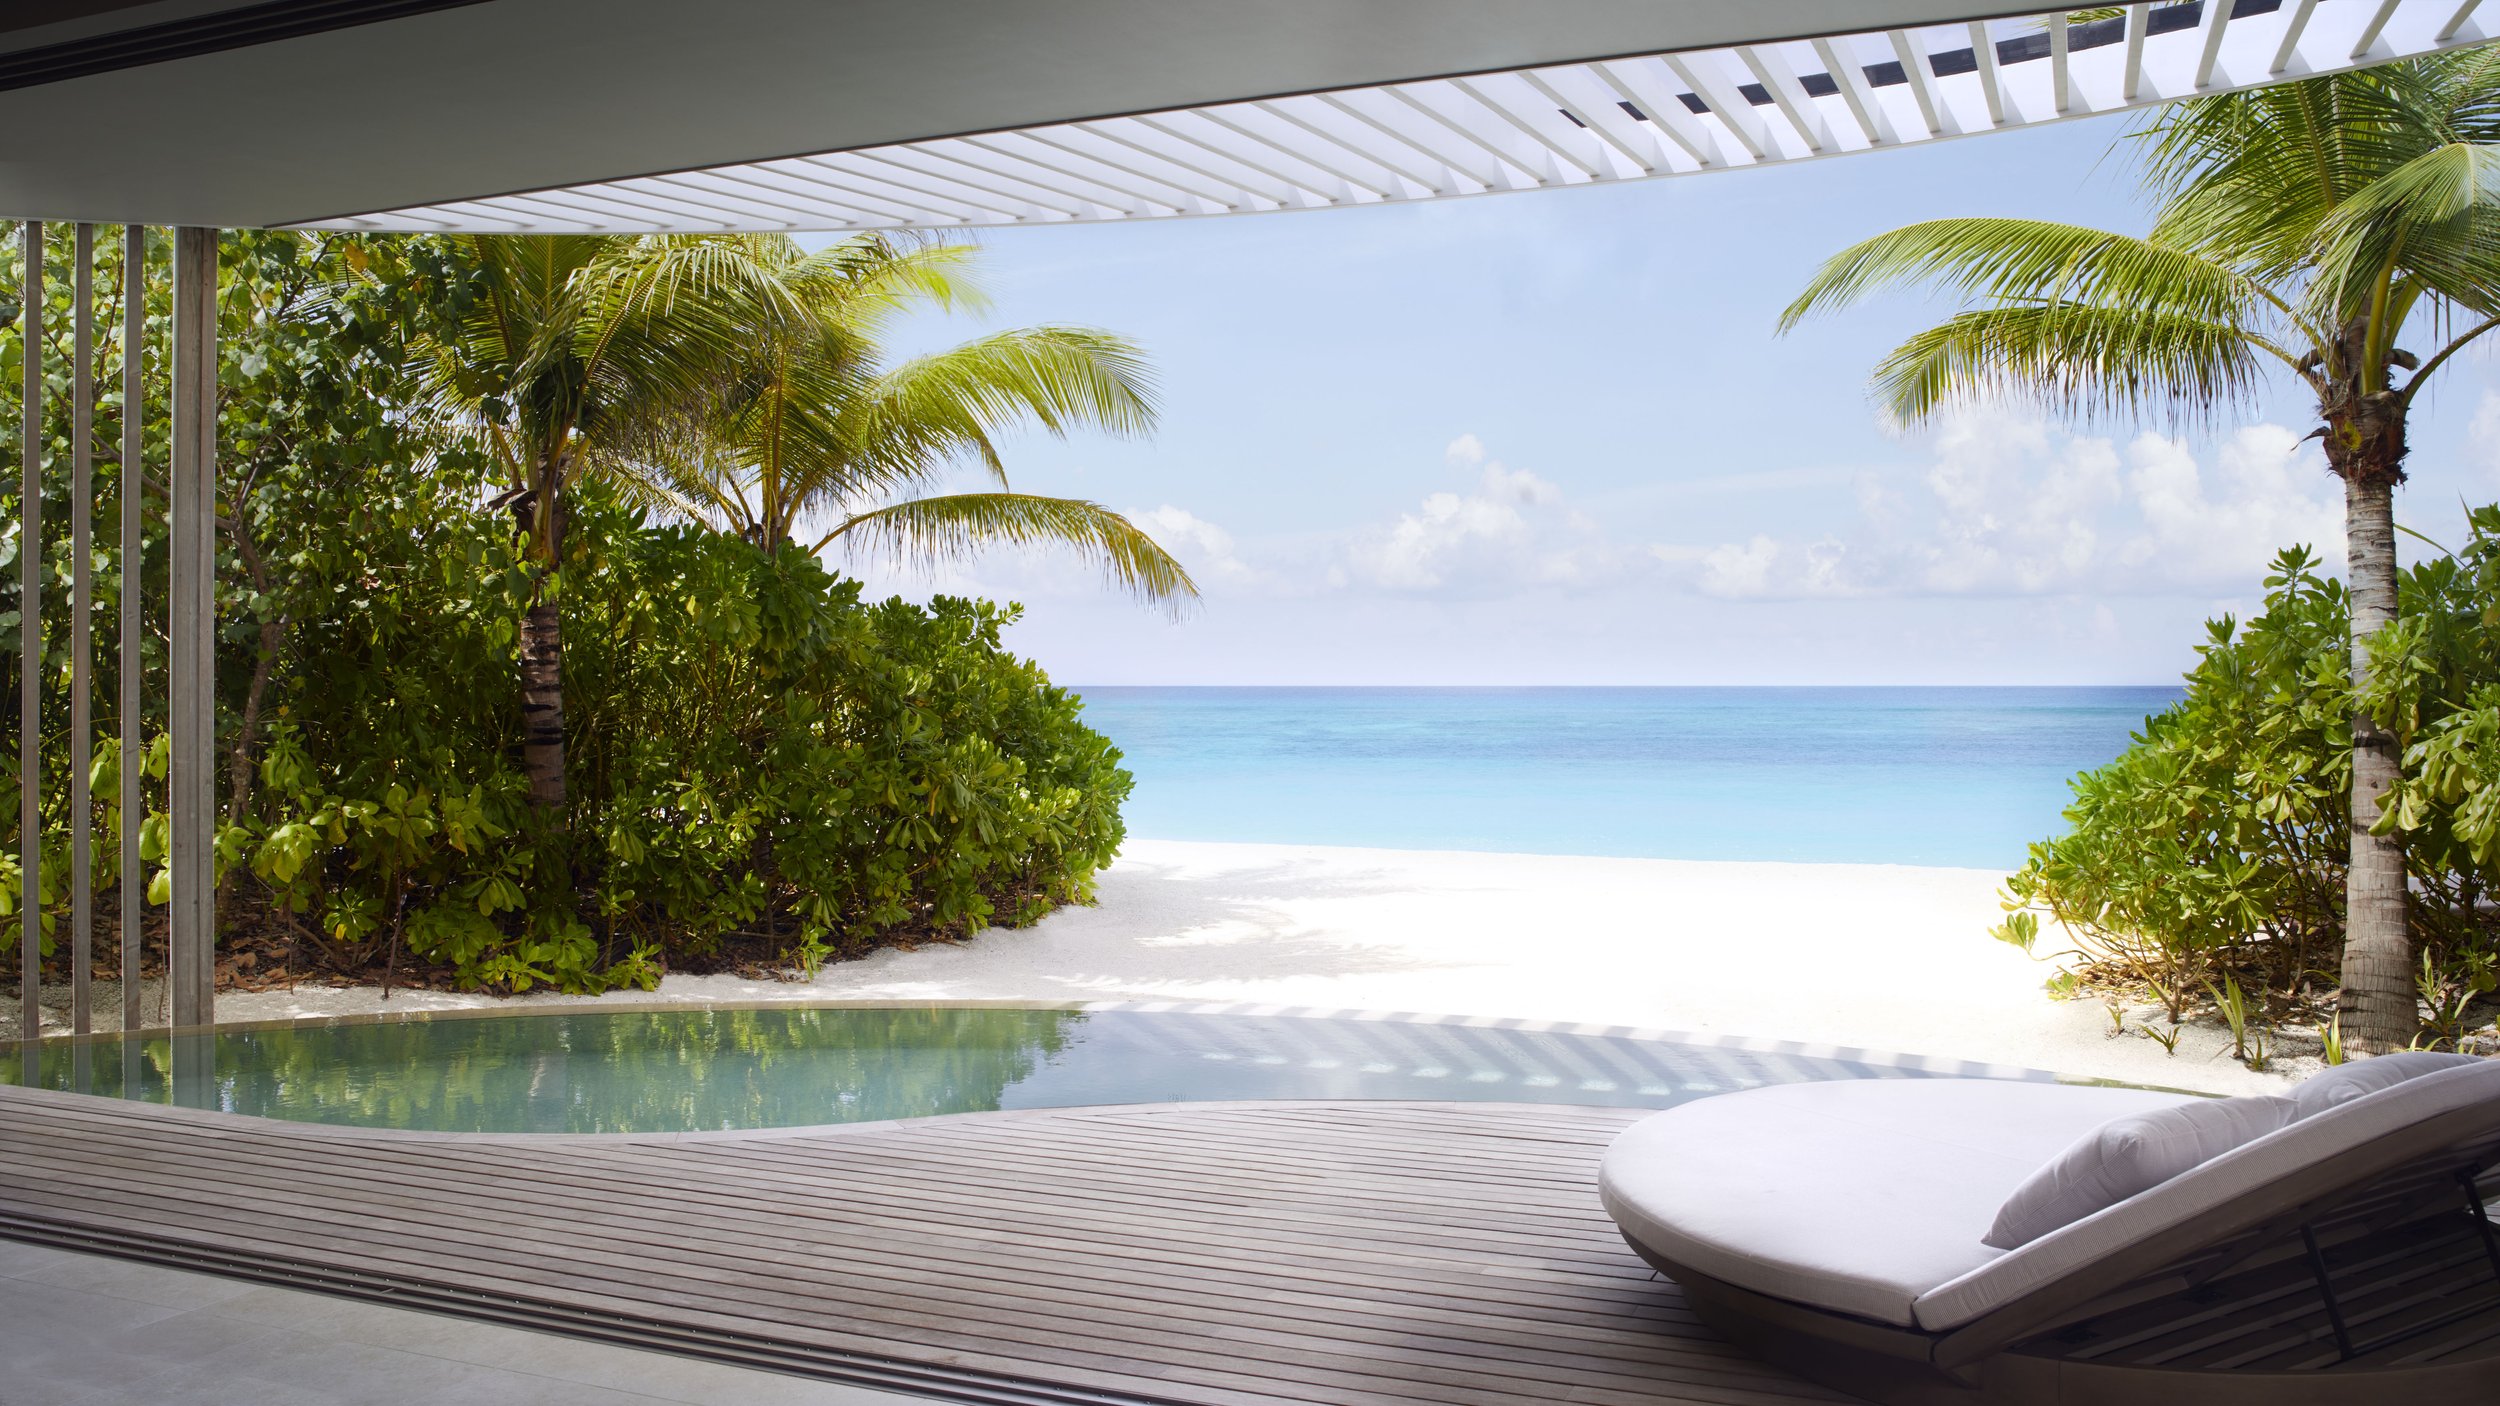 The Ritz-Carlton Maldives, Fari Islands - Beach Front Villa - deck.jpg